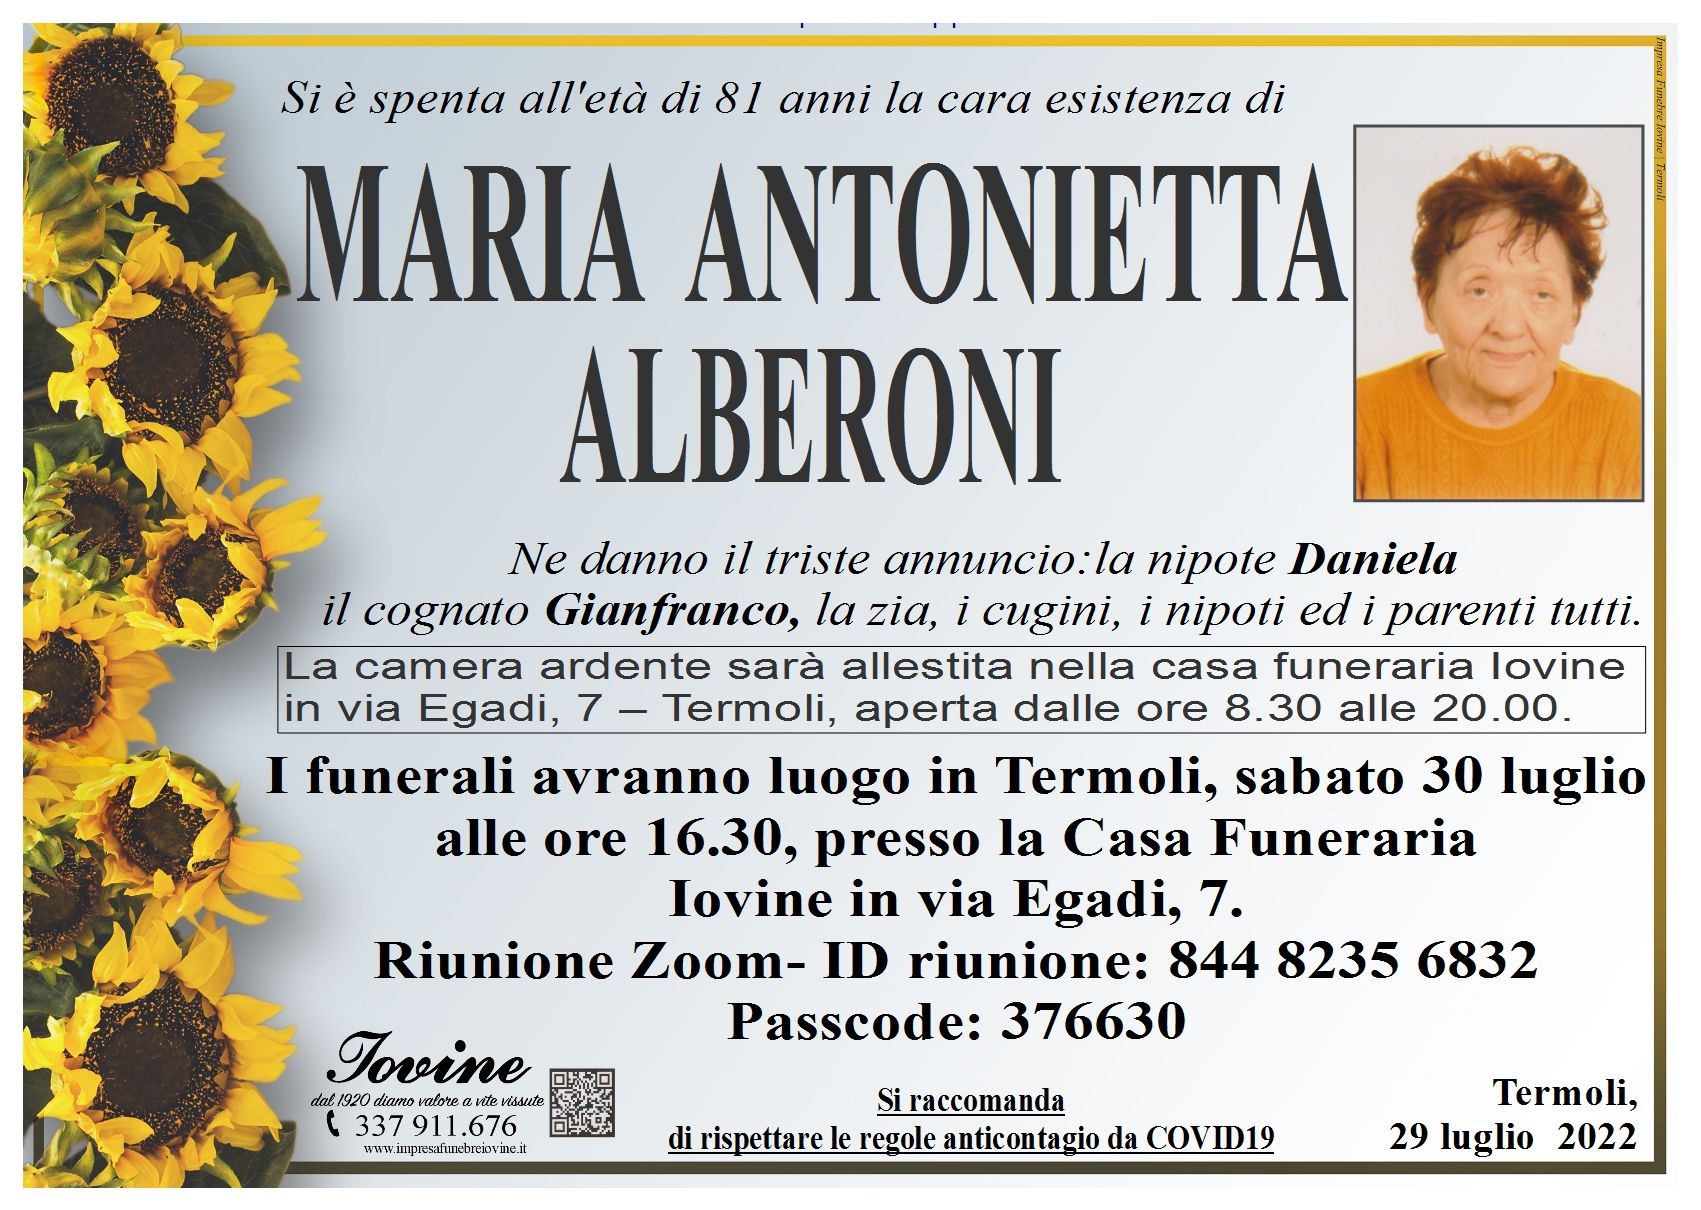 ANNUNCIO: MARIA ANTONIETTA ALBERONI - Primonumero